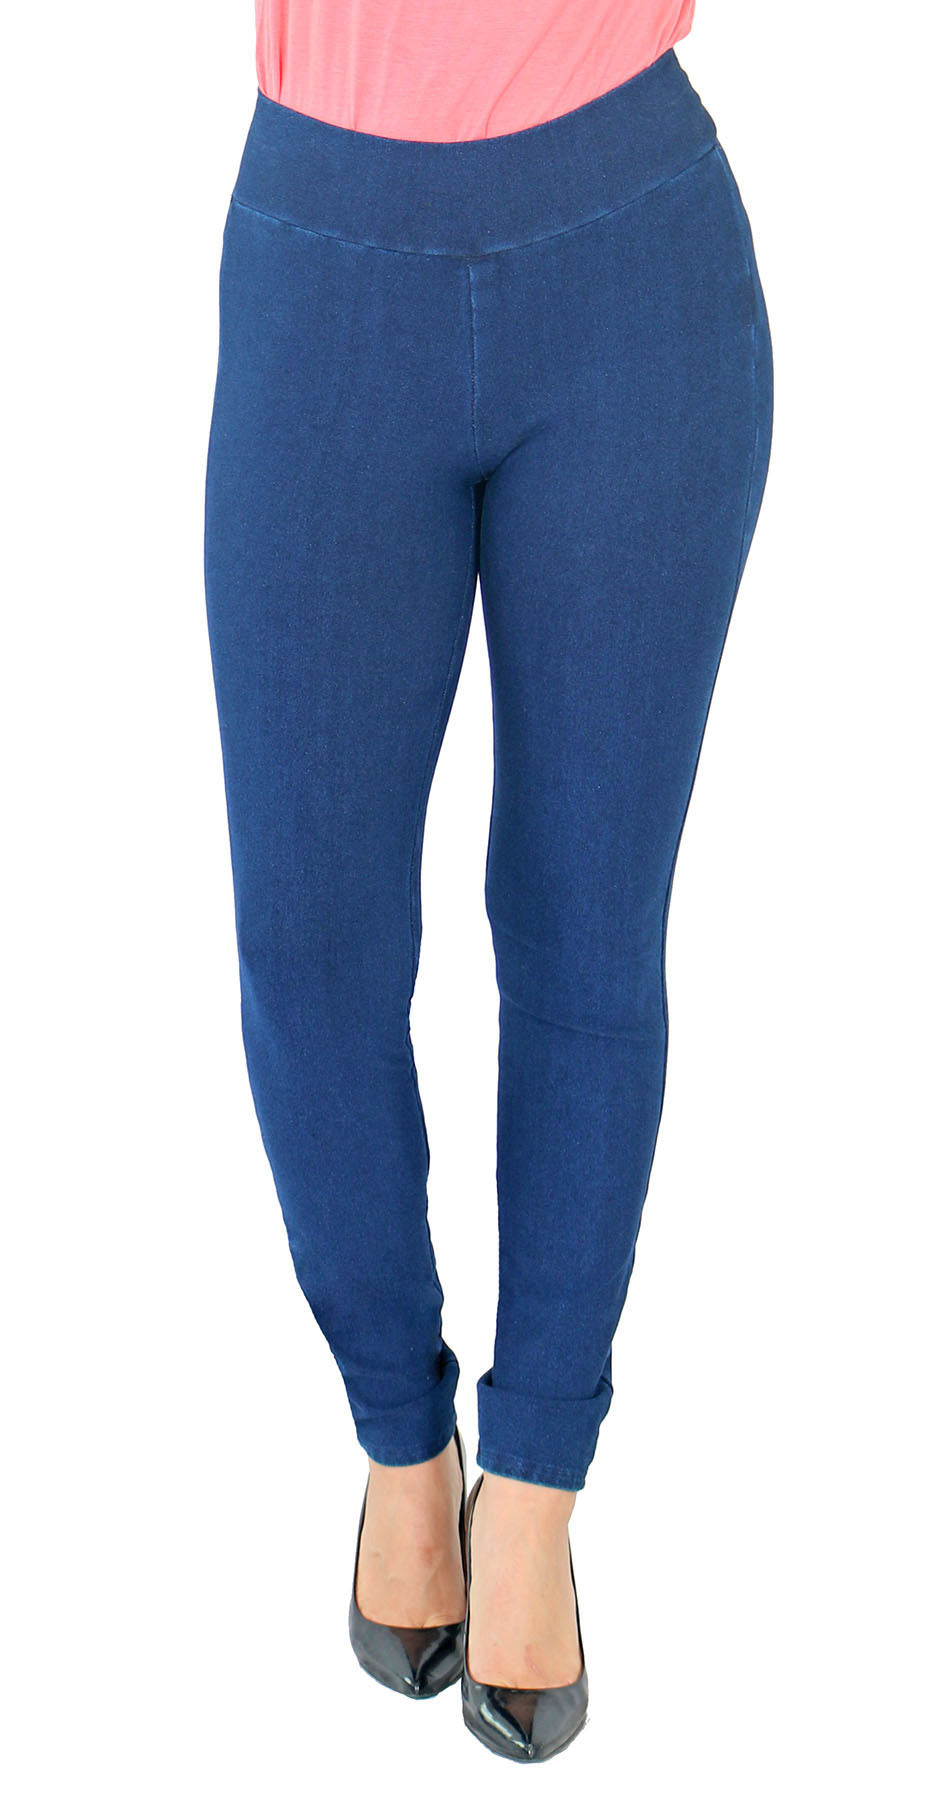 TrueSlim™ Indigo Leggings for Women – TrueSlim Jeans